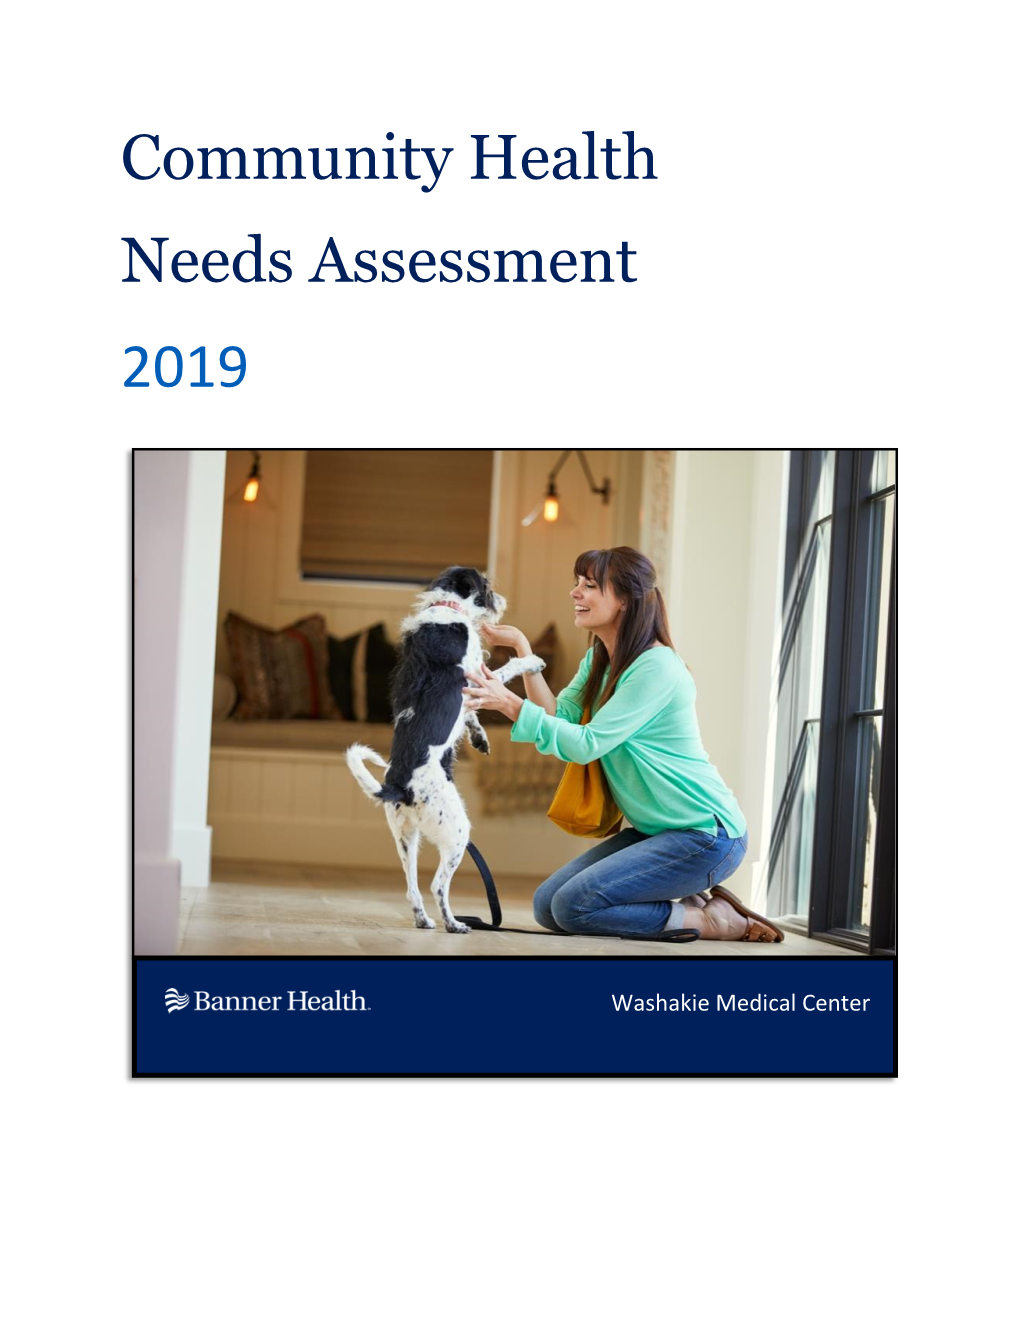 2019 Community Health Needs Assessment